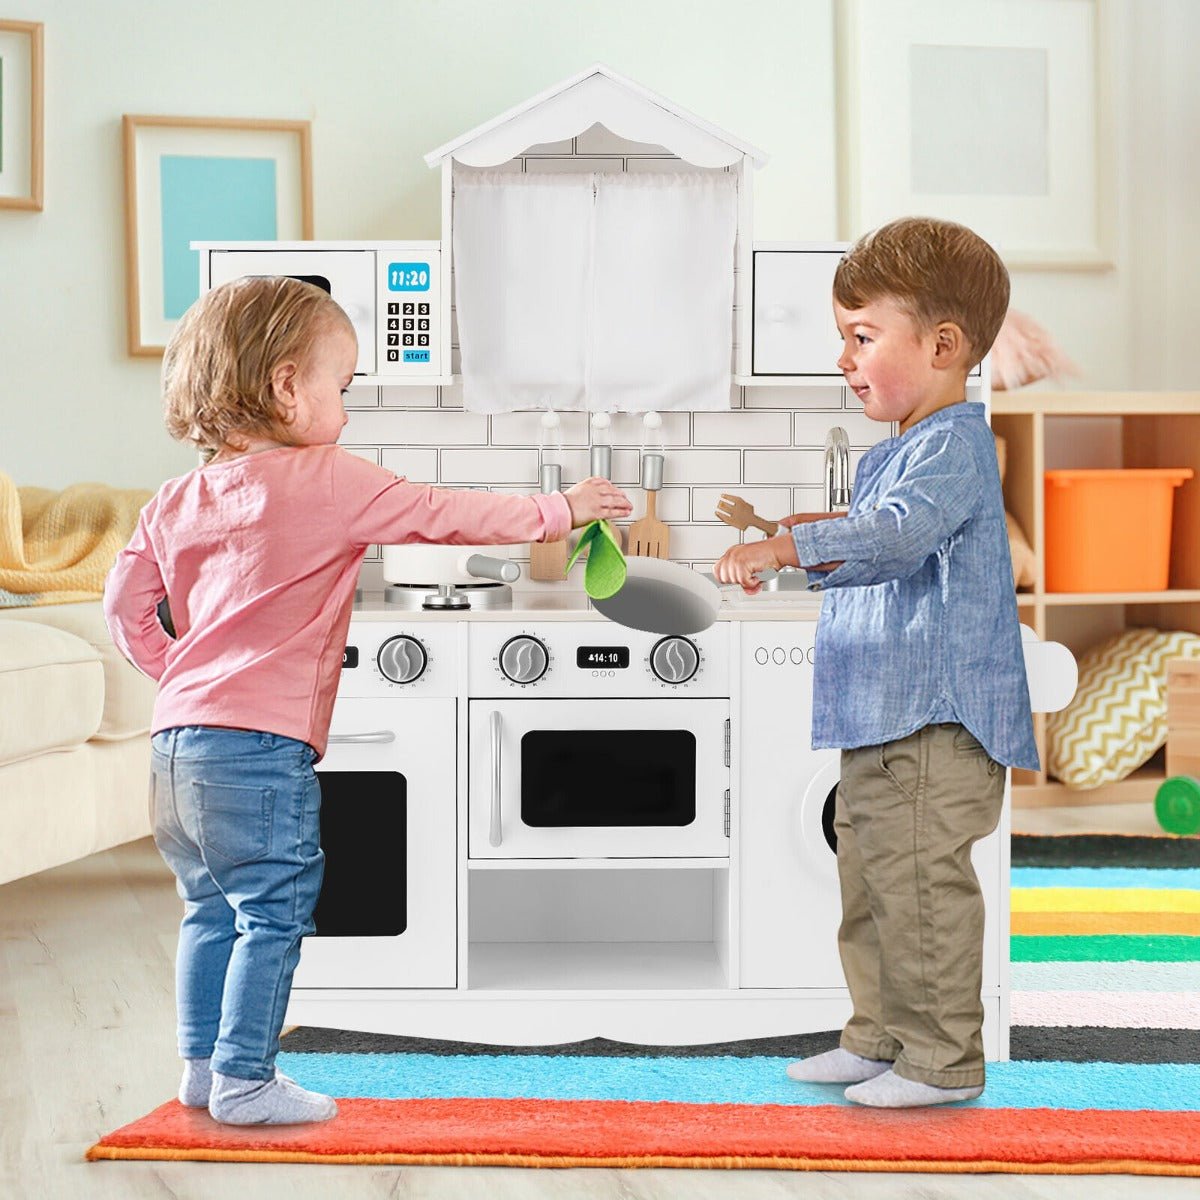 Inspire Imagination: Pretend Kitchen Toys with Washing Machine